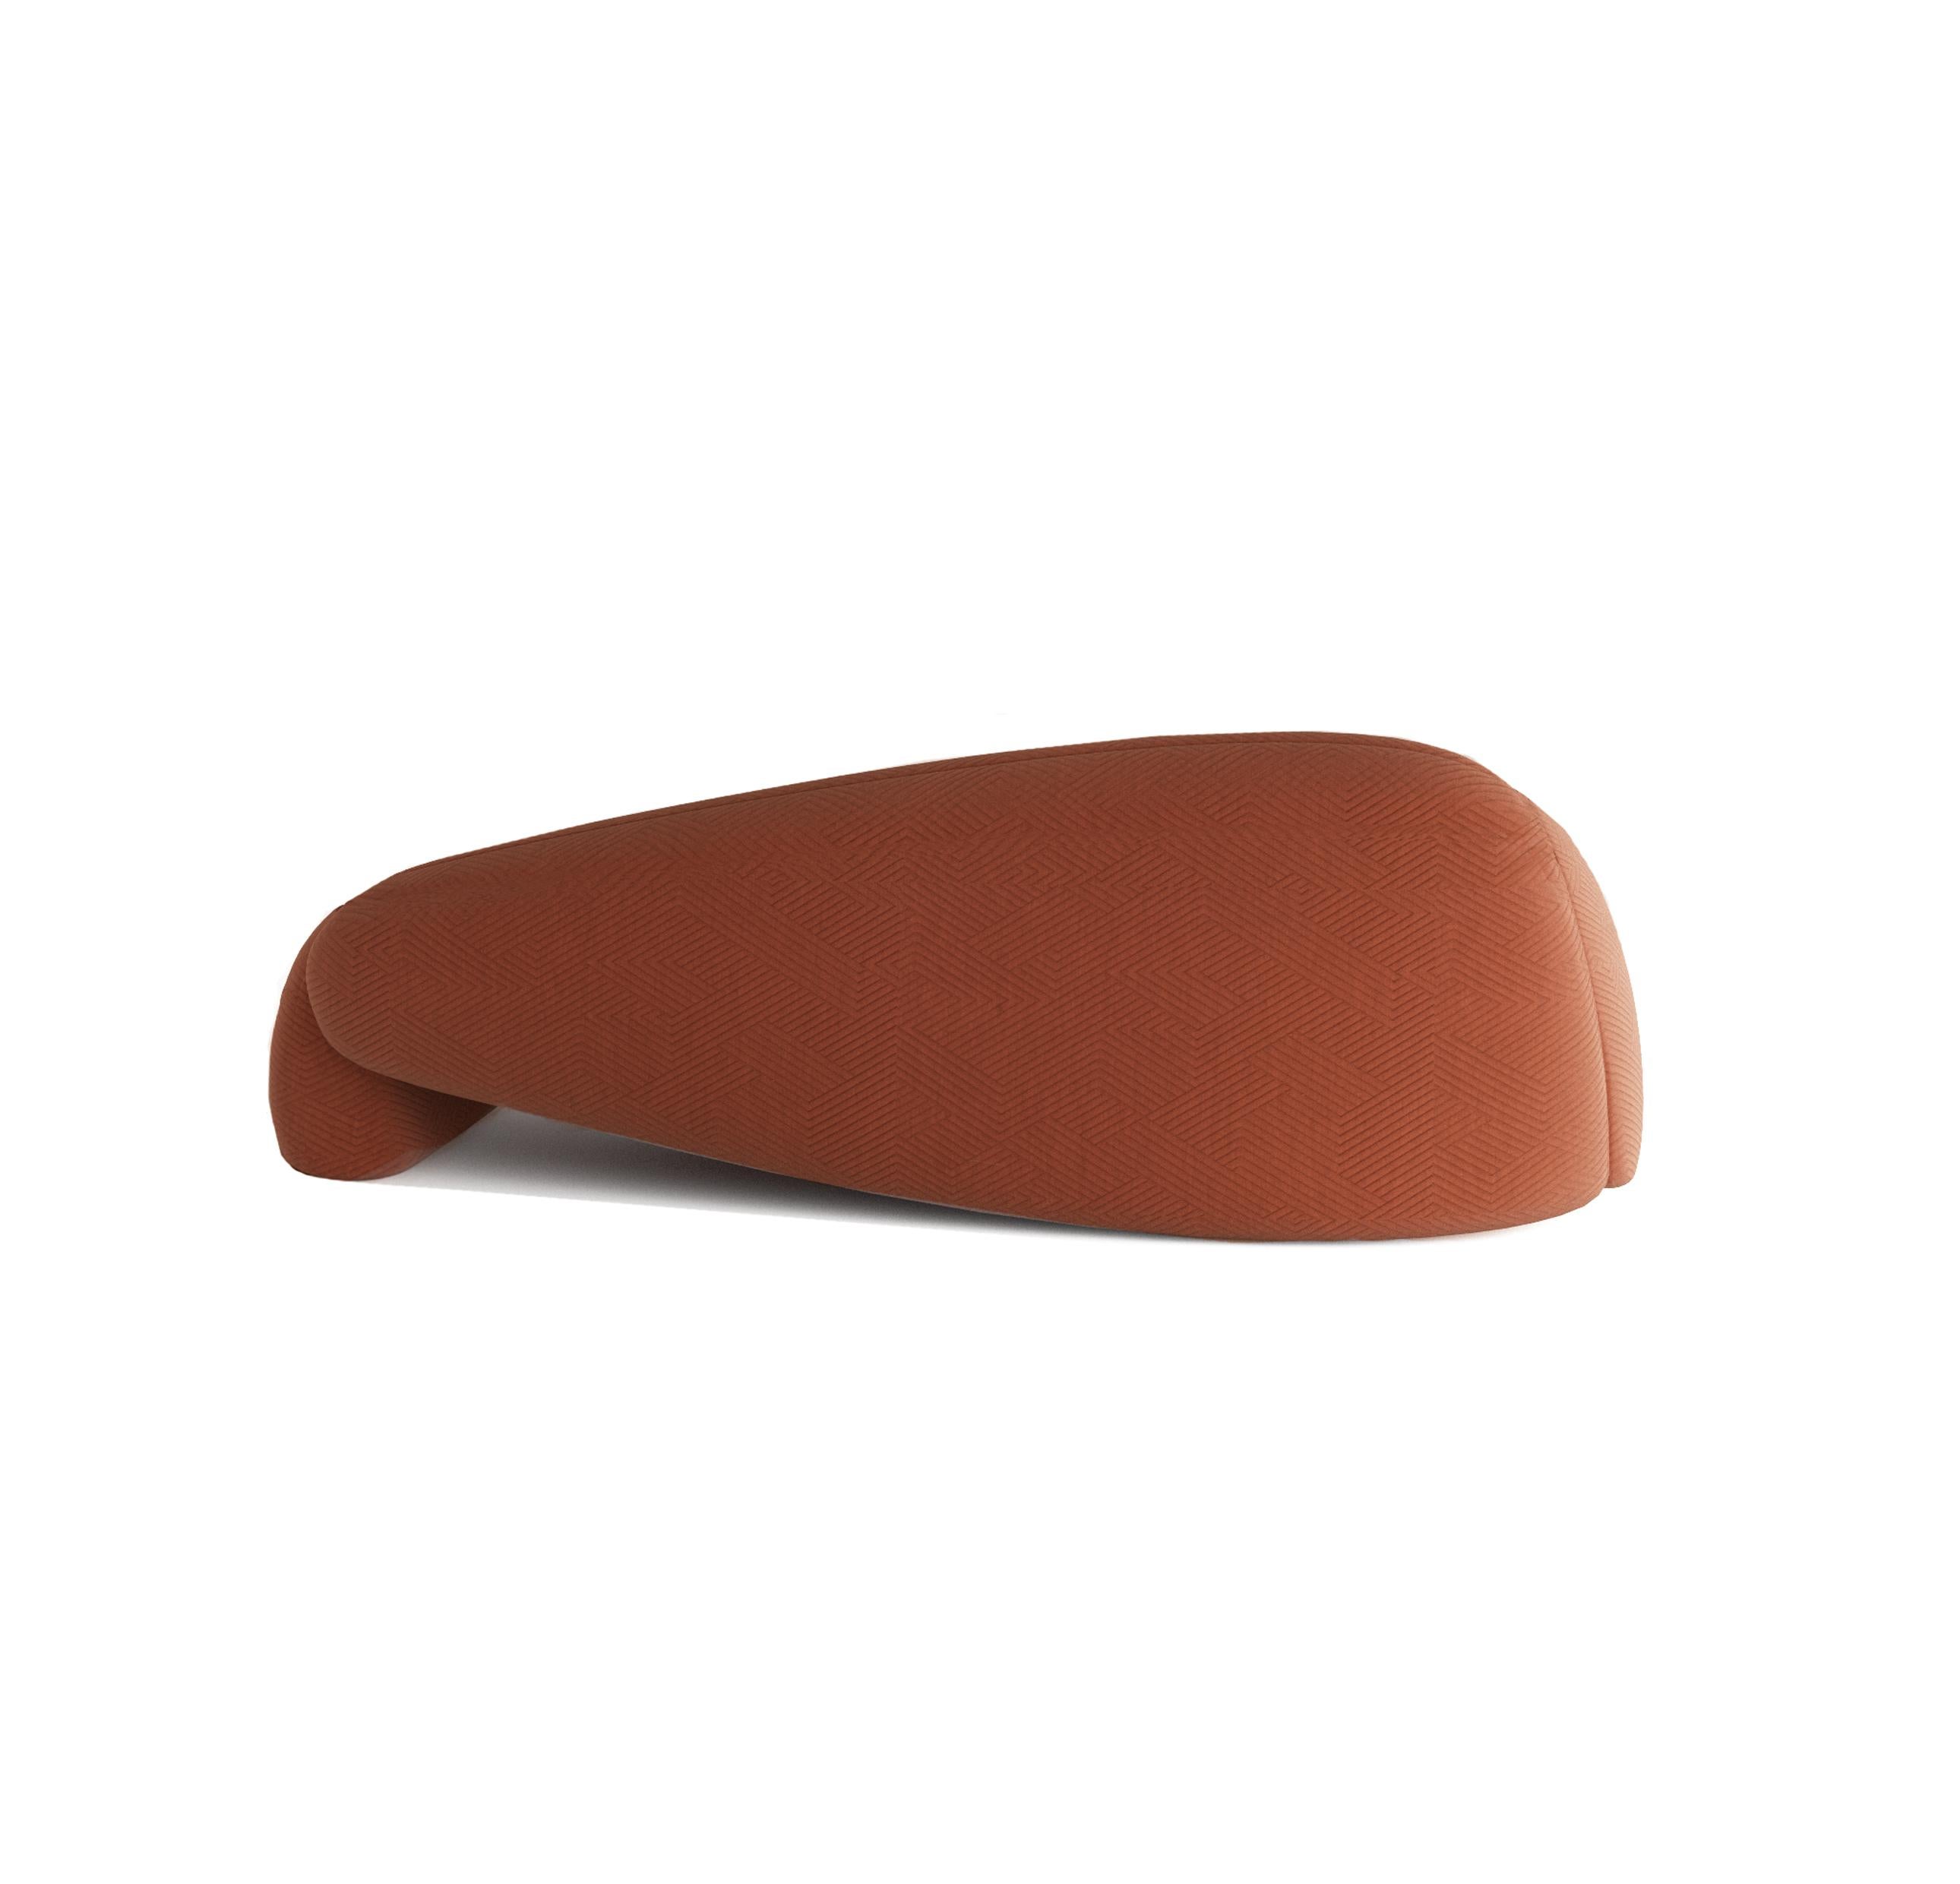 Jell-Sofa aus rotem Stoff von Alter Ego Studio (Postmoderne) im Angebot